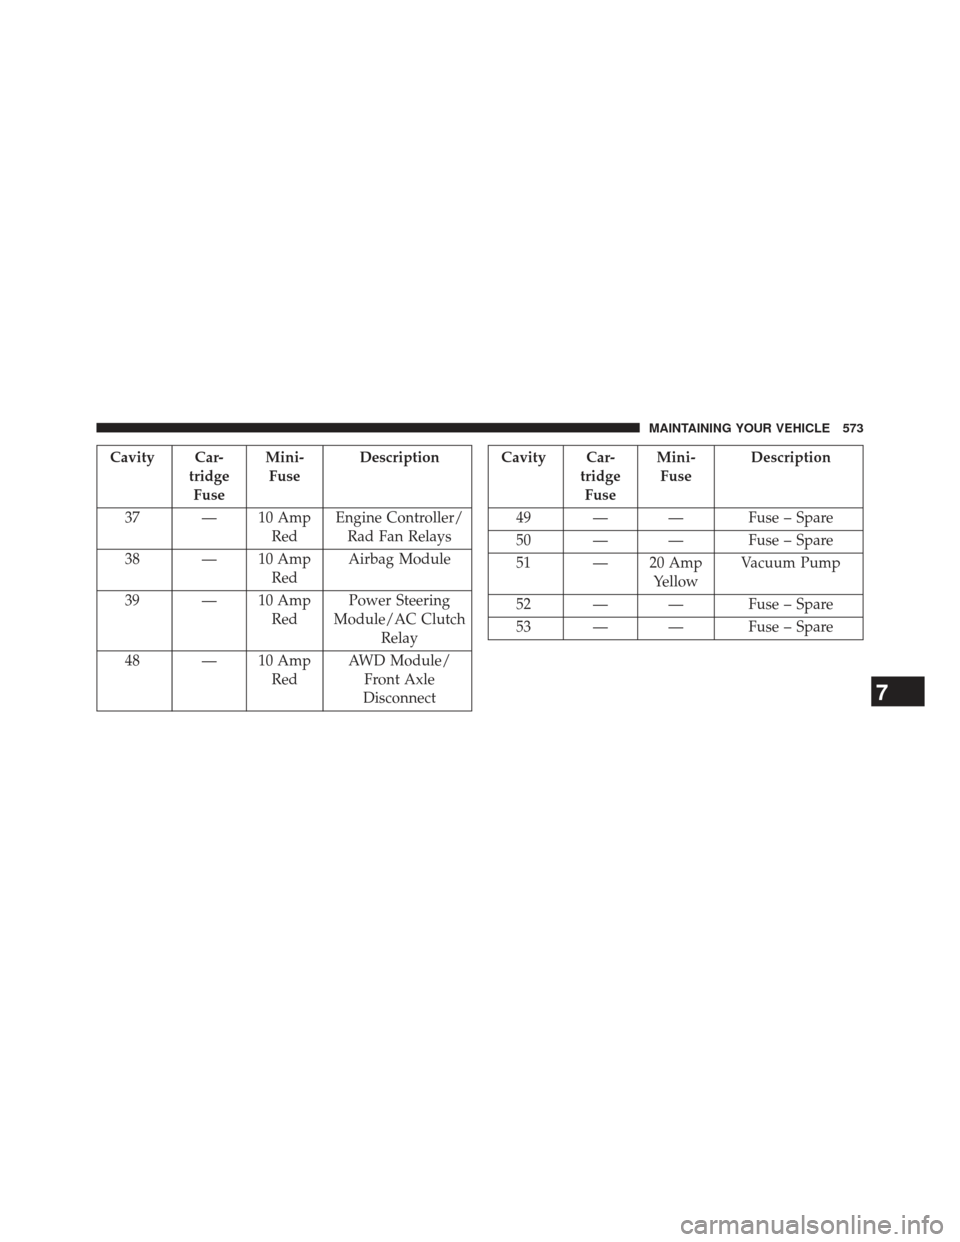 DODGE CHARGER 2013 7.G Owners Manual Cavity Car-tridgeFuse Mini-
Fuse Description
37 — 10 Amp RedEngine Controller/
Rad Fan Relays
38 — 10 Amp RedAirbag Module
39 — 10 Amp RedPower Steering
Module/AC Clutch Relay
48 — 10 Amp RedA